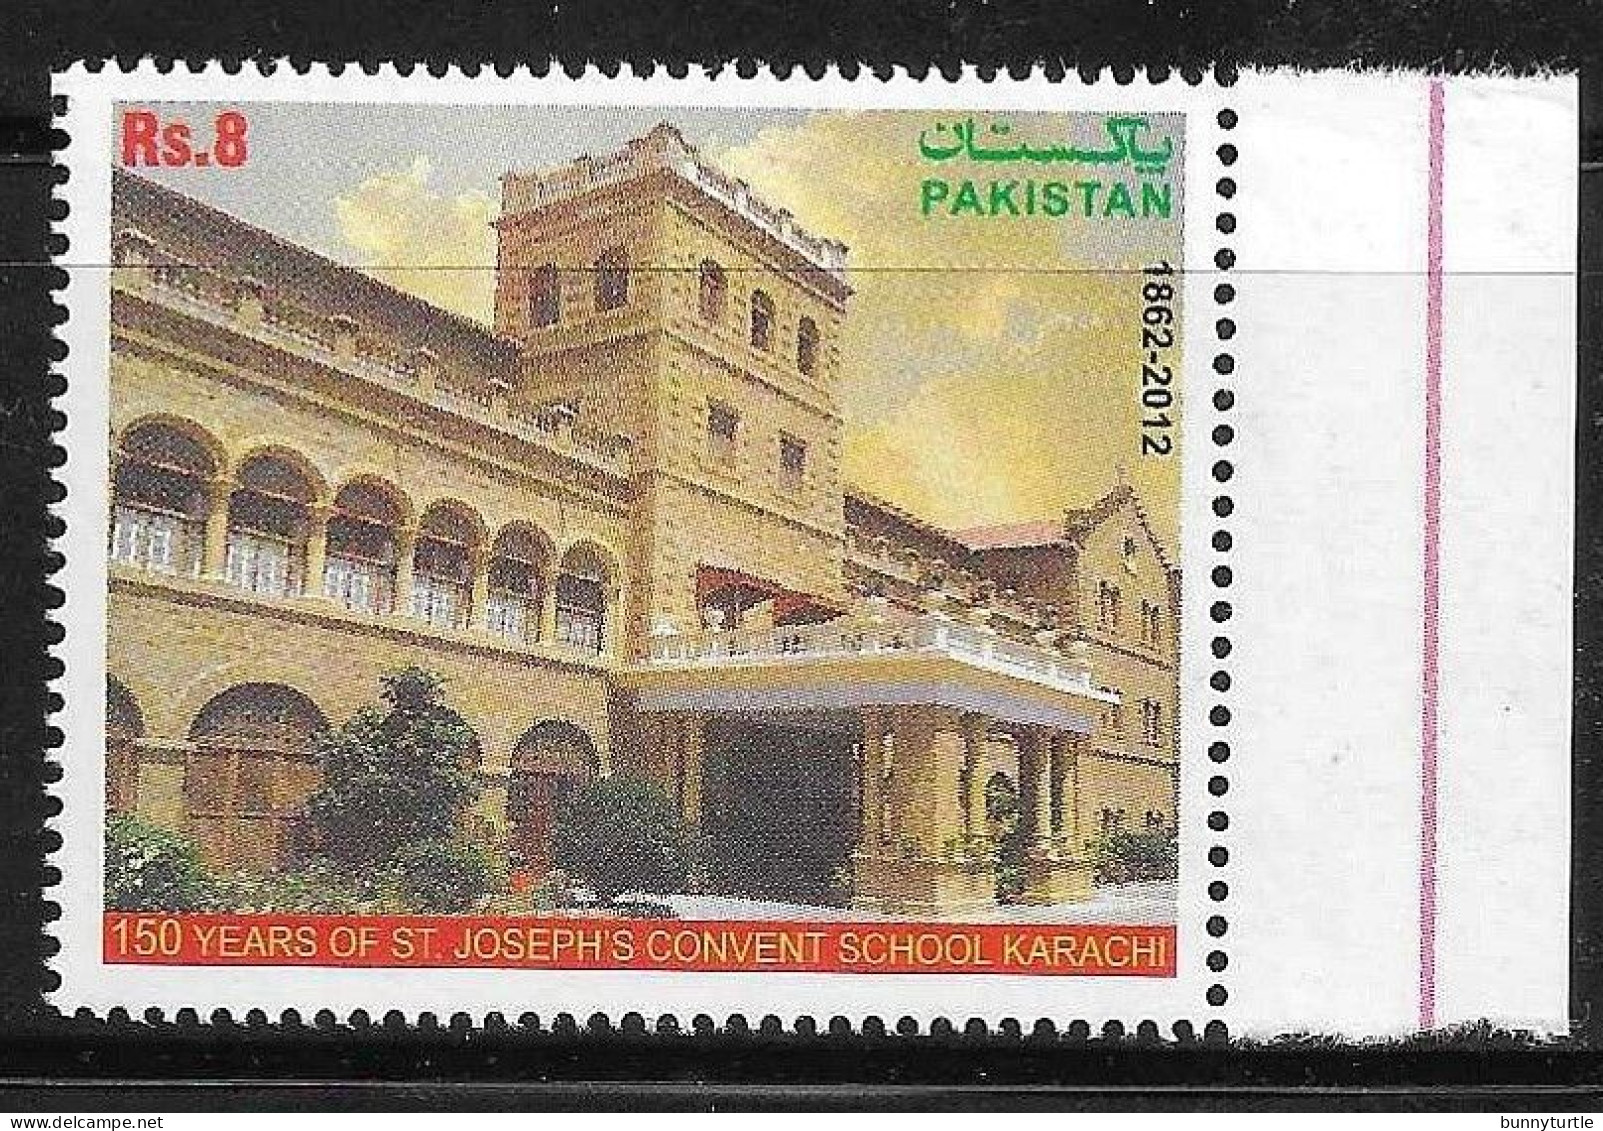 Pakistan 2012 St Joseph's Convent School Karachi MNH - Pakistan